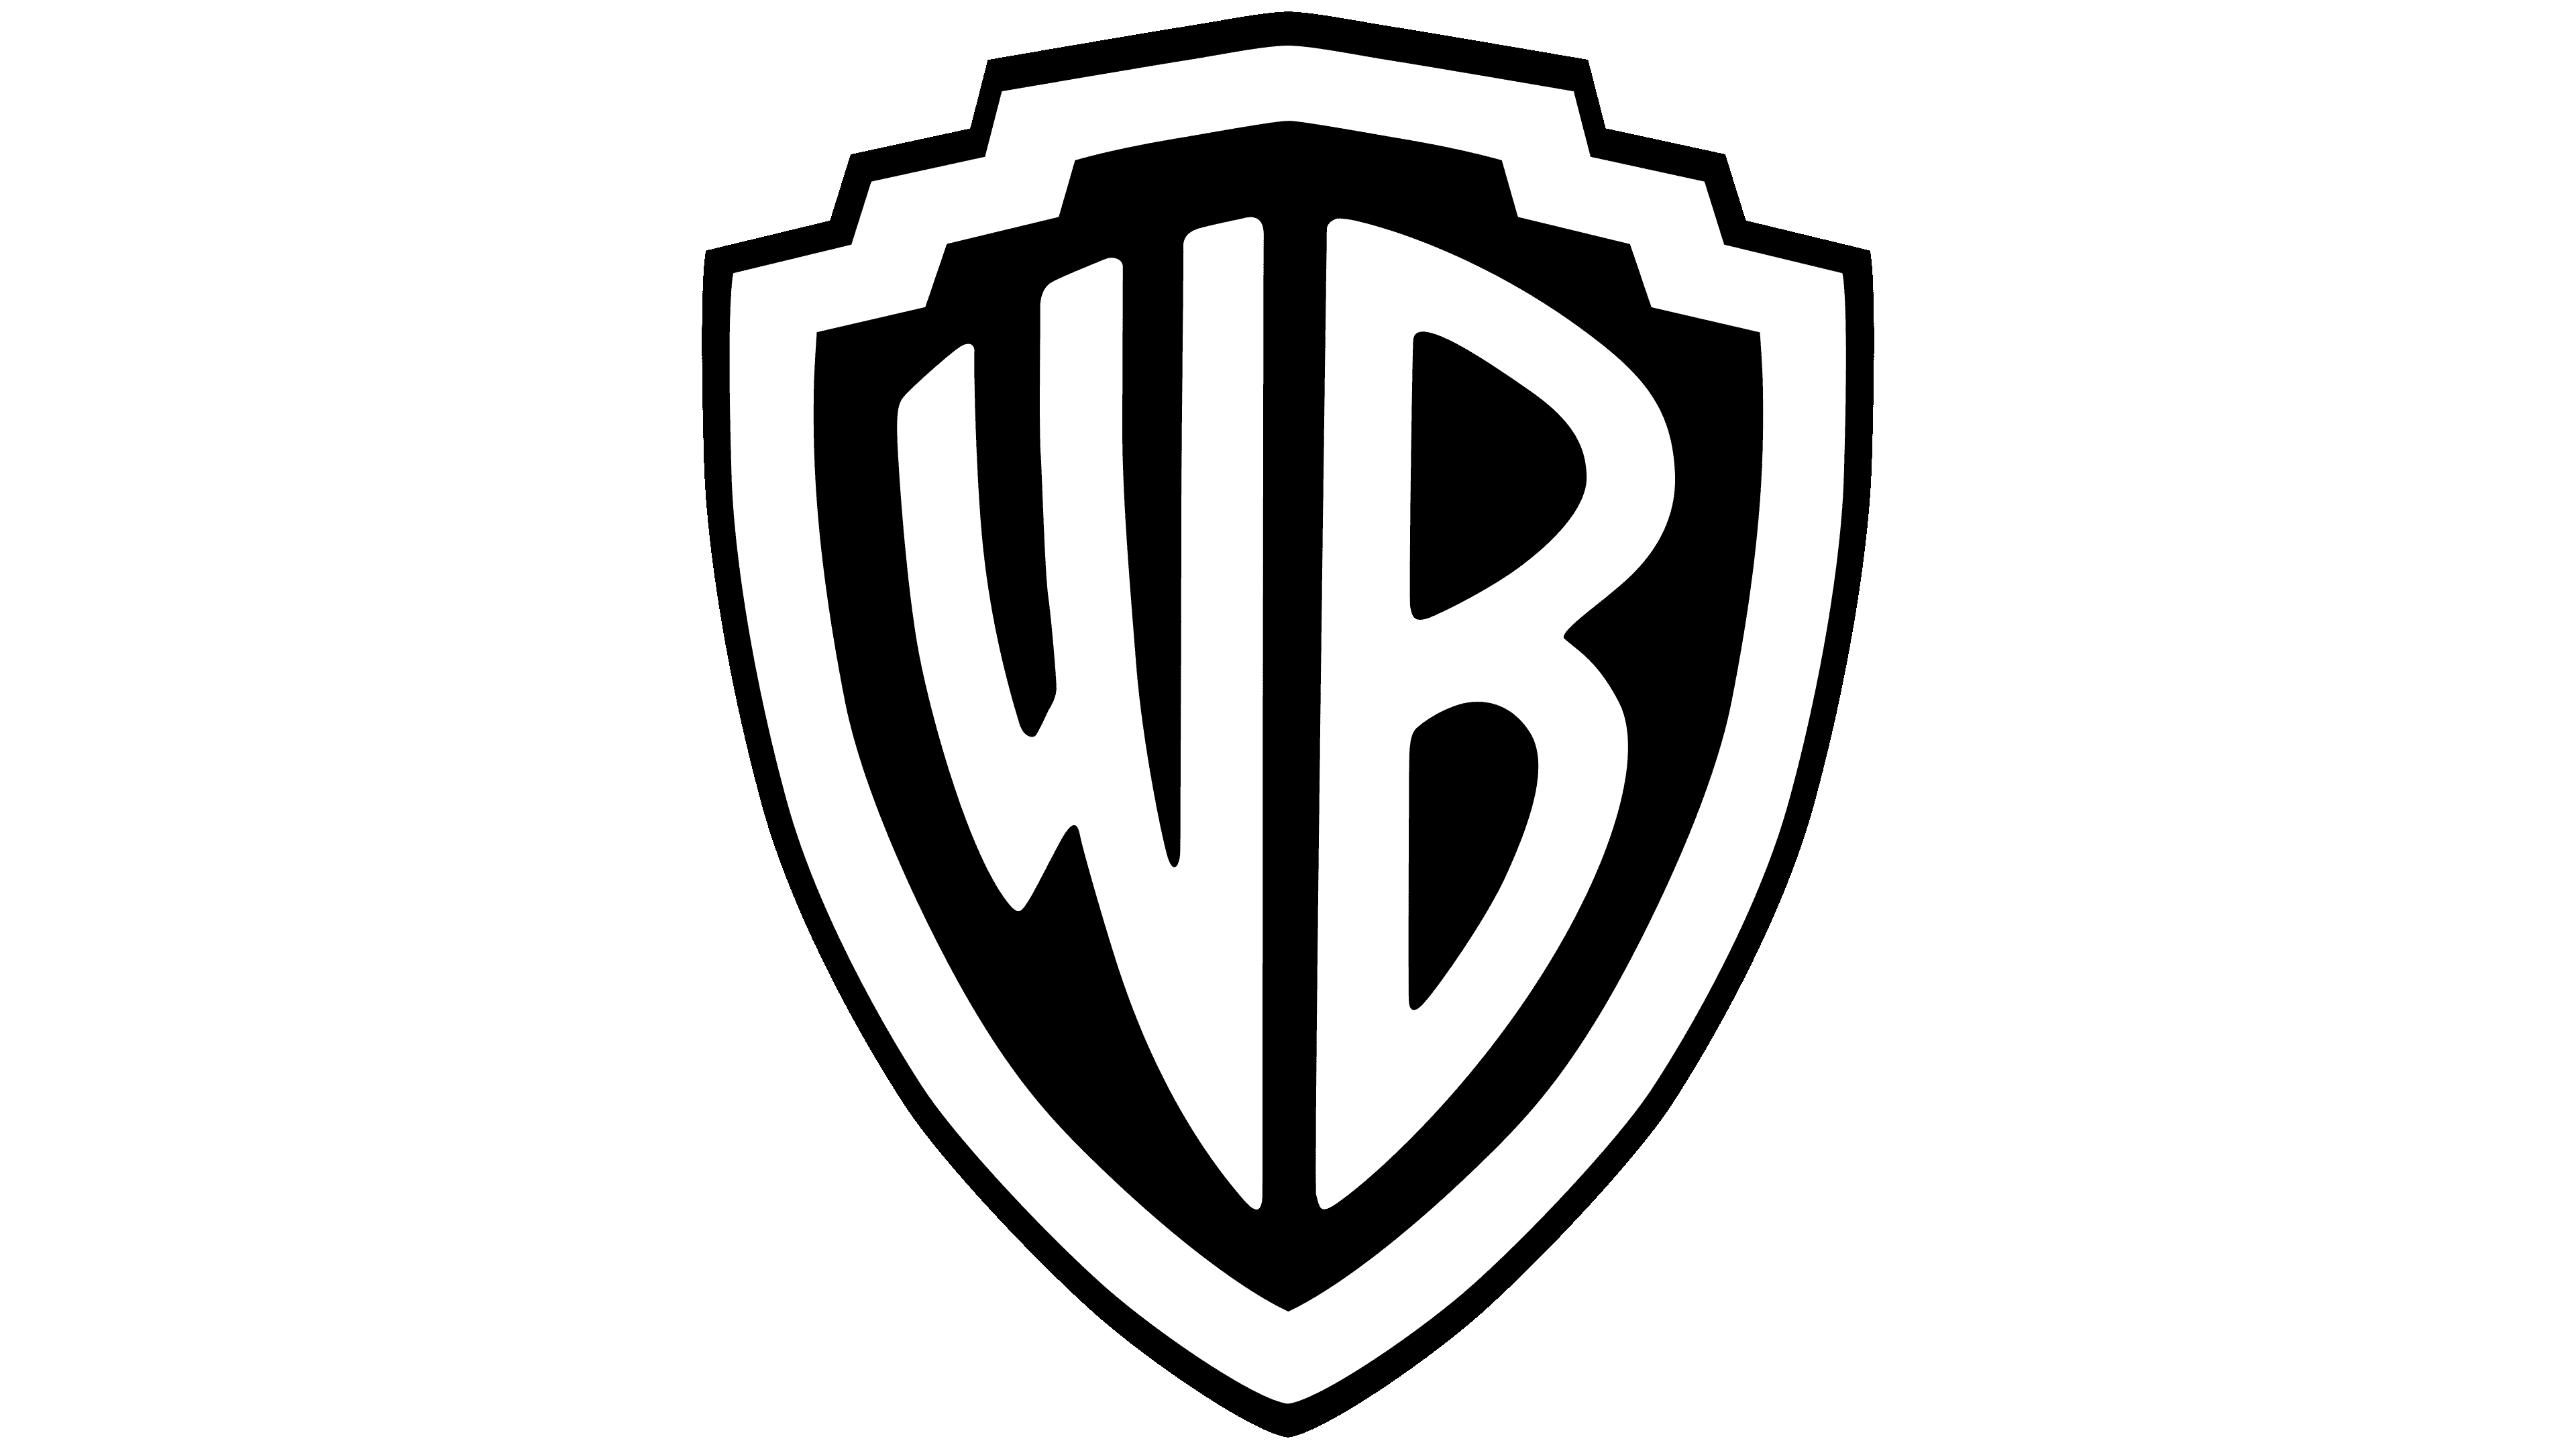 Warner Bros. Pictures (1948) 